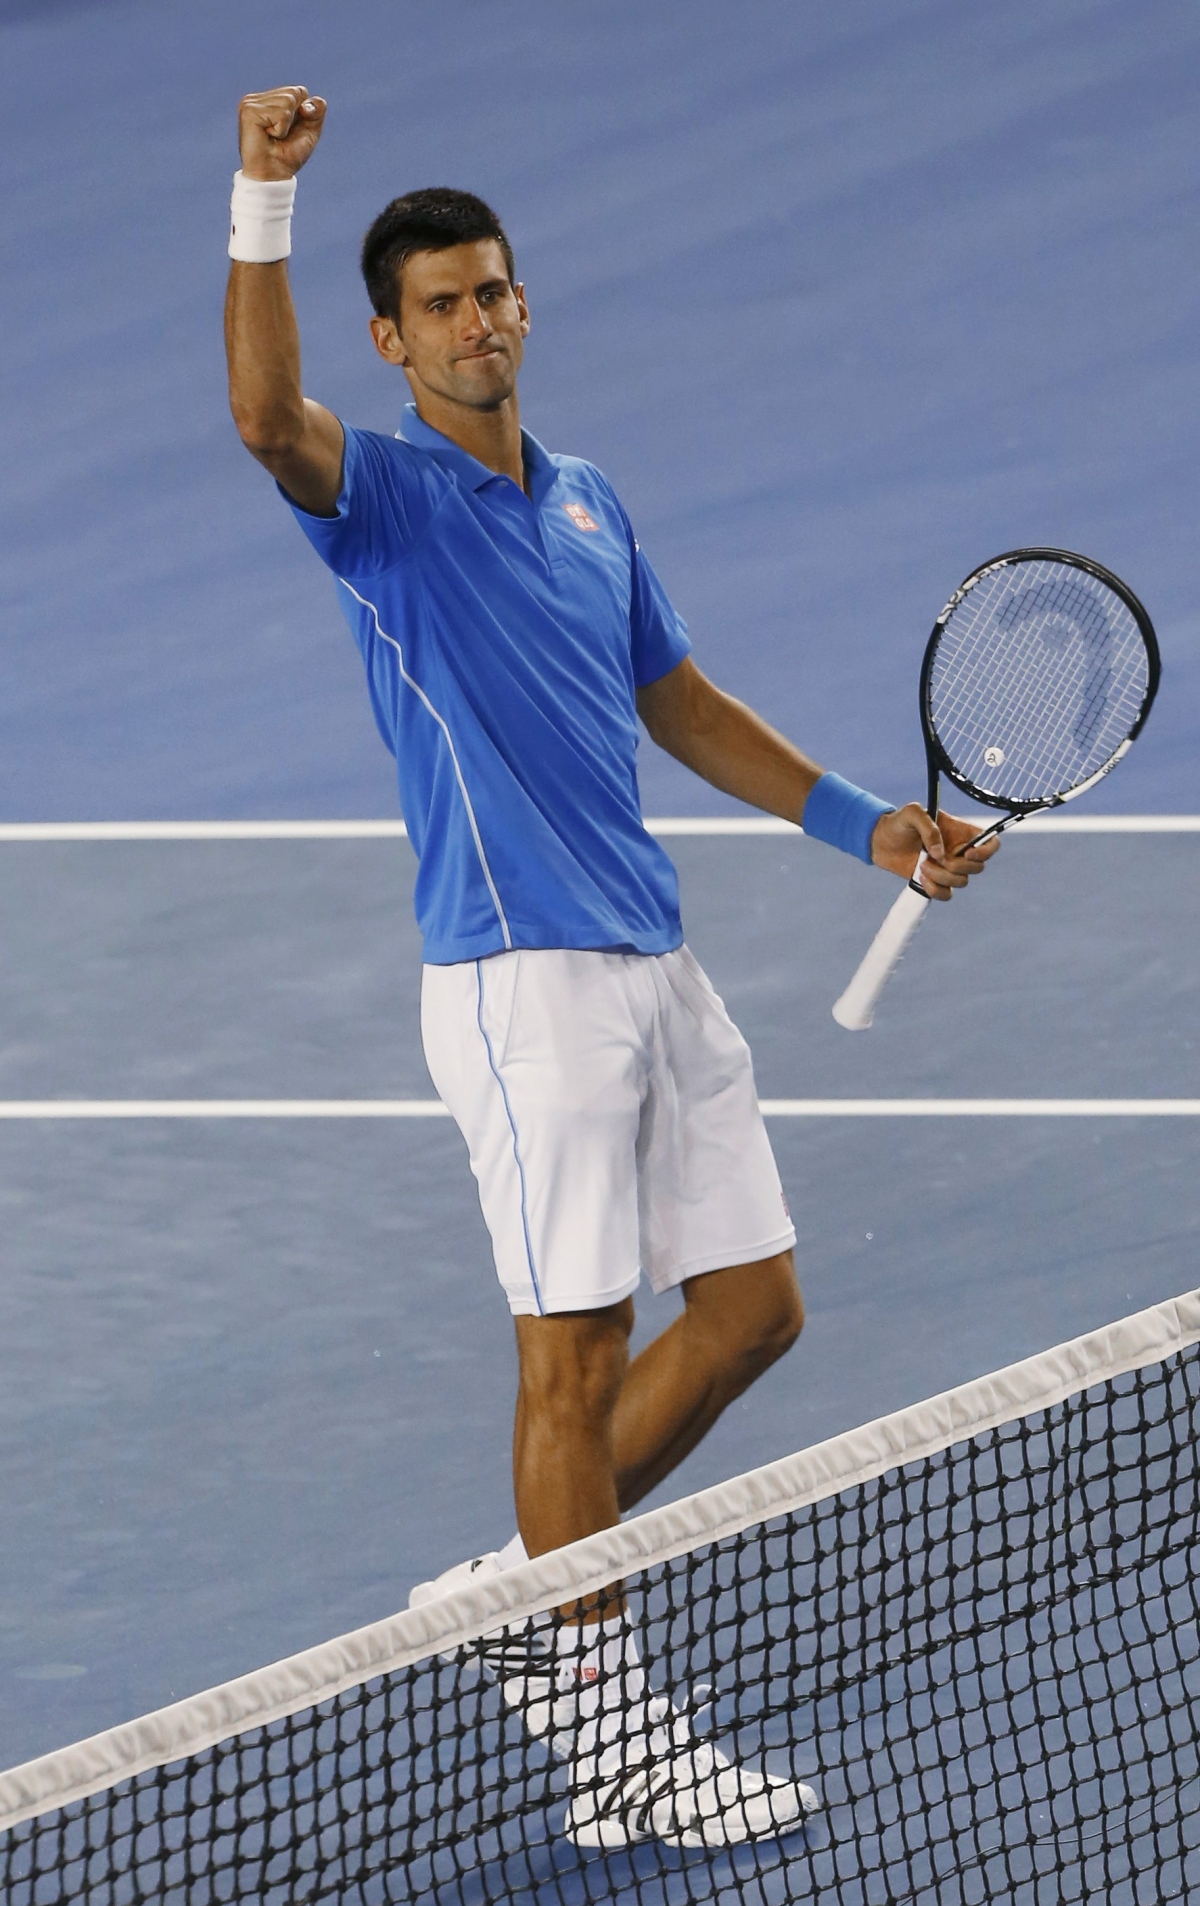 Watch Australian Open Semifinal Live Novak Djokovic vs Stanislas Wawrinka Live Streaming Information